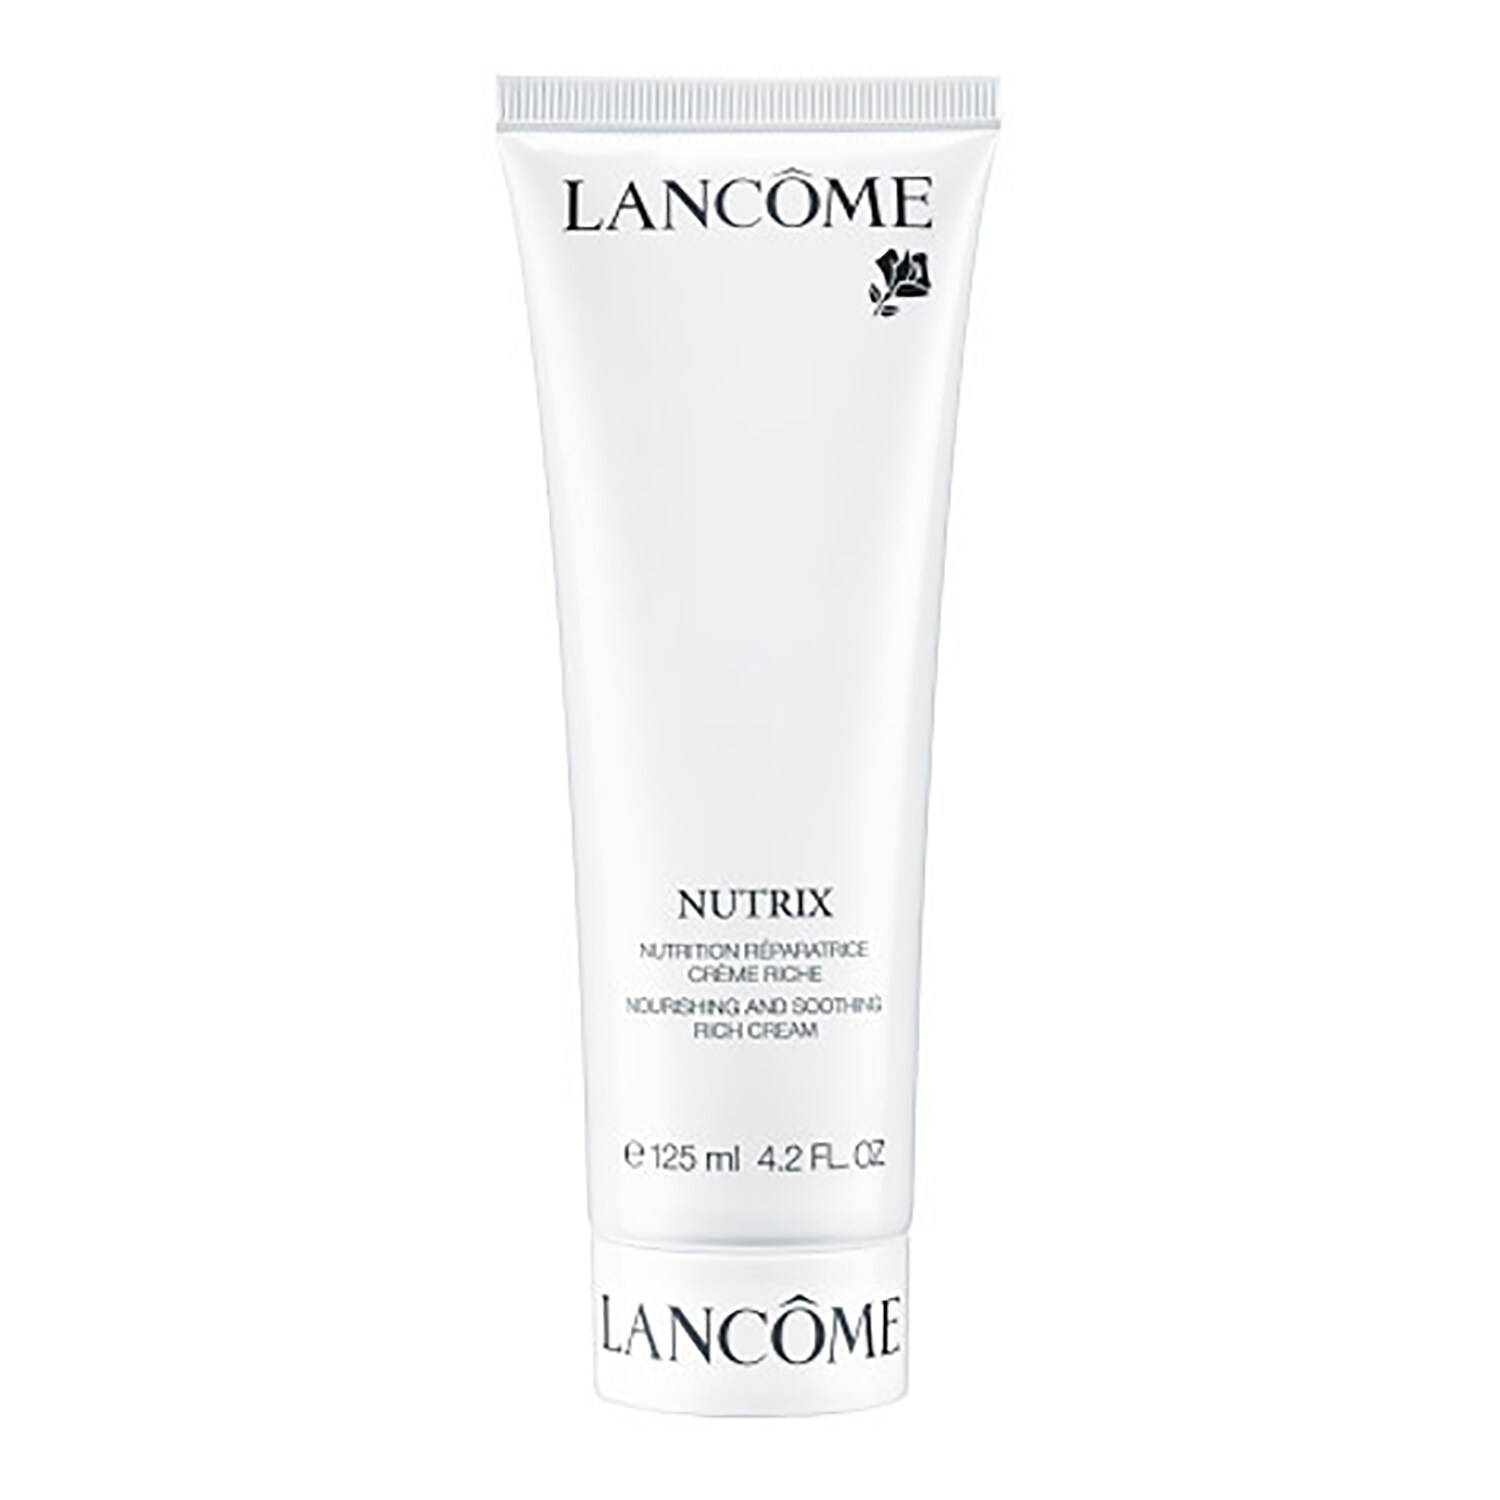 Lancome Nutrix Face Cream 125Ml